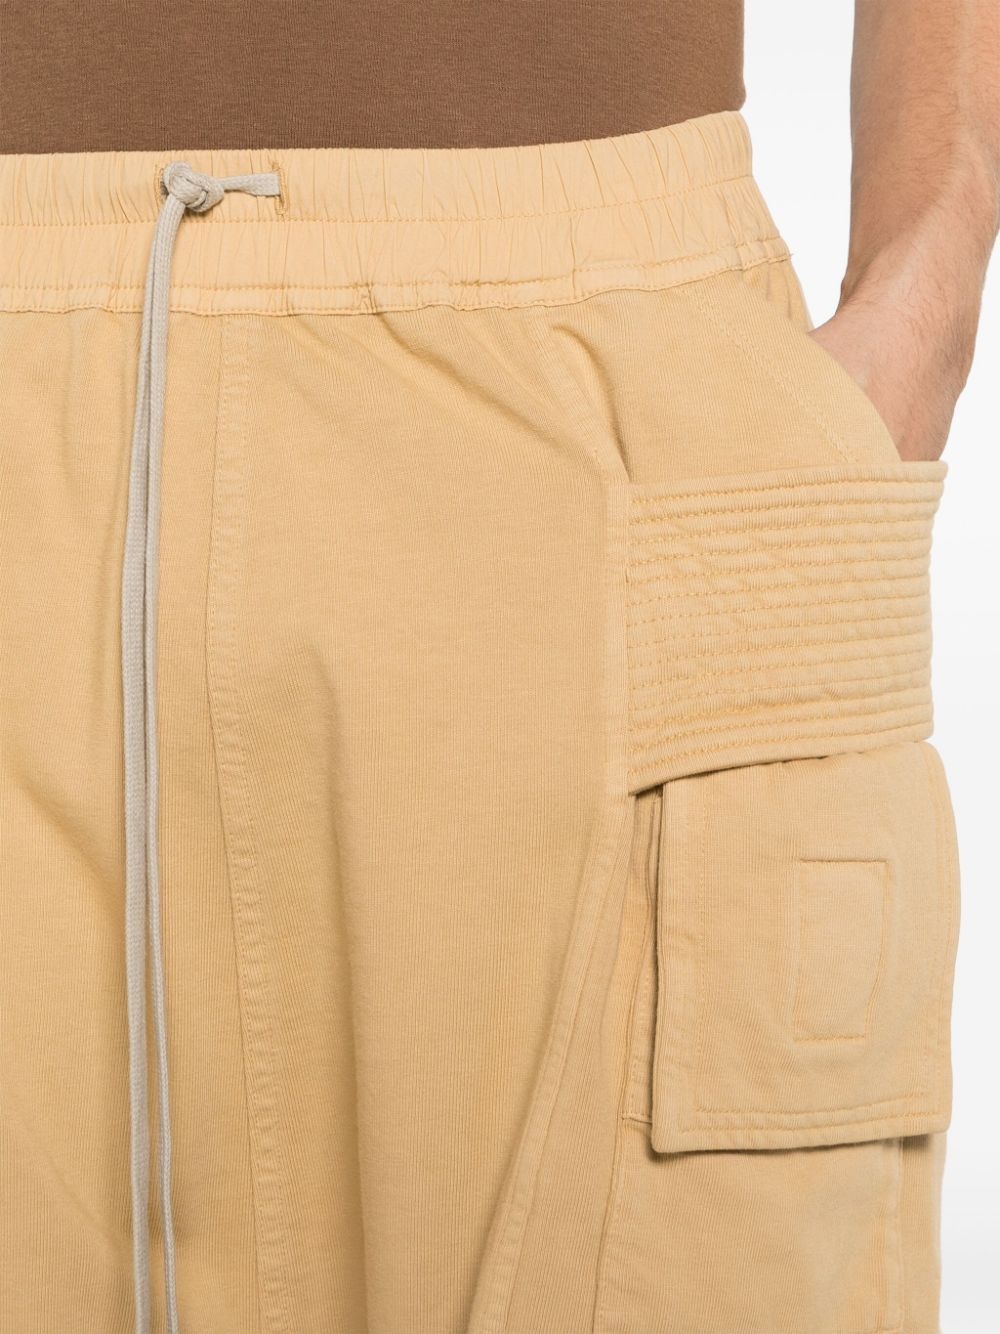 Creatch Pods drop-crotch shorts - 5